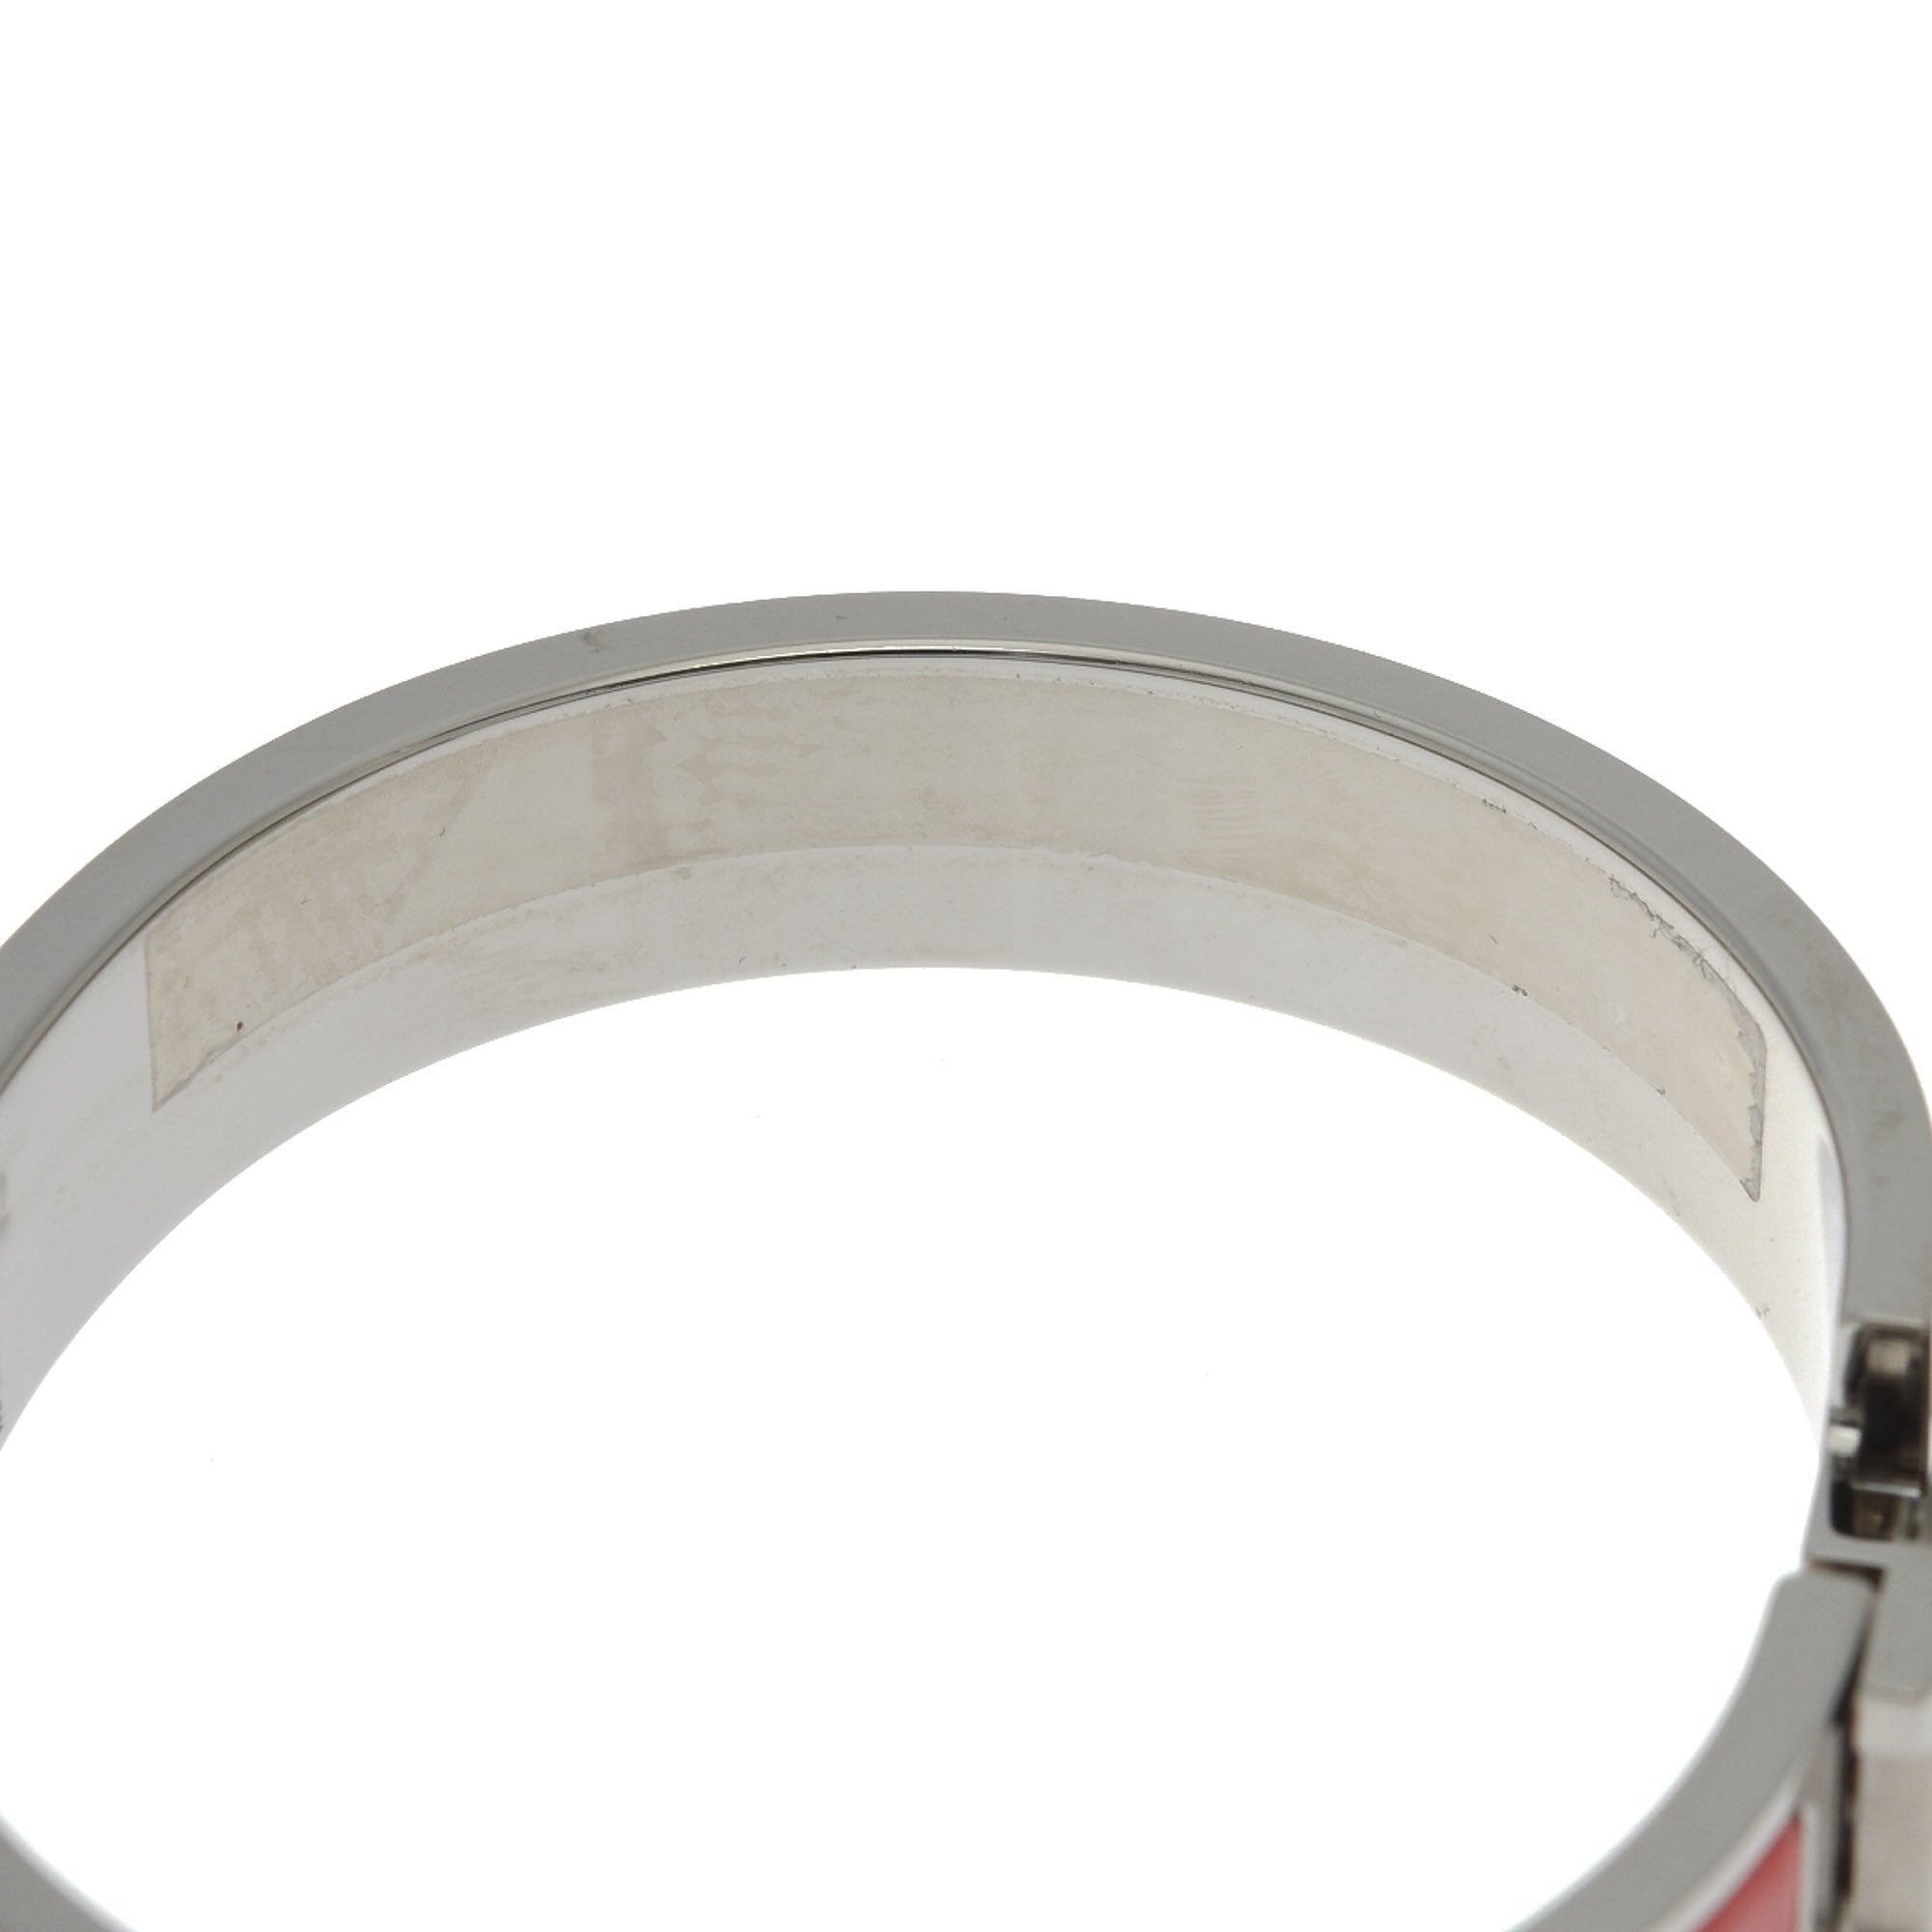 Clic H GM Narrow, Used & Preloved Hermes Bracelet, LXR USA, Pink